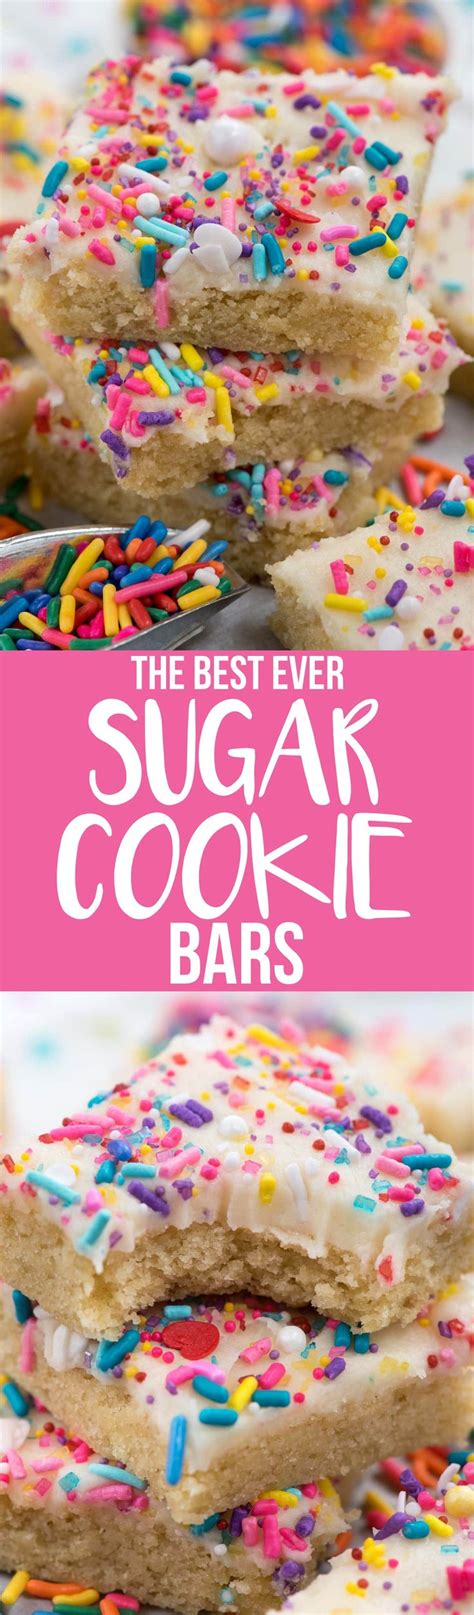 Best Sugar Cookie Bars Recipe Sugar Cookie Bar Recipe Sugar Cookie